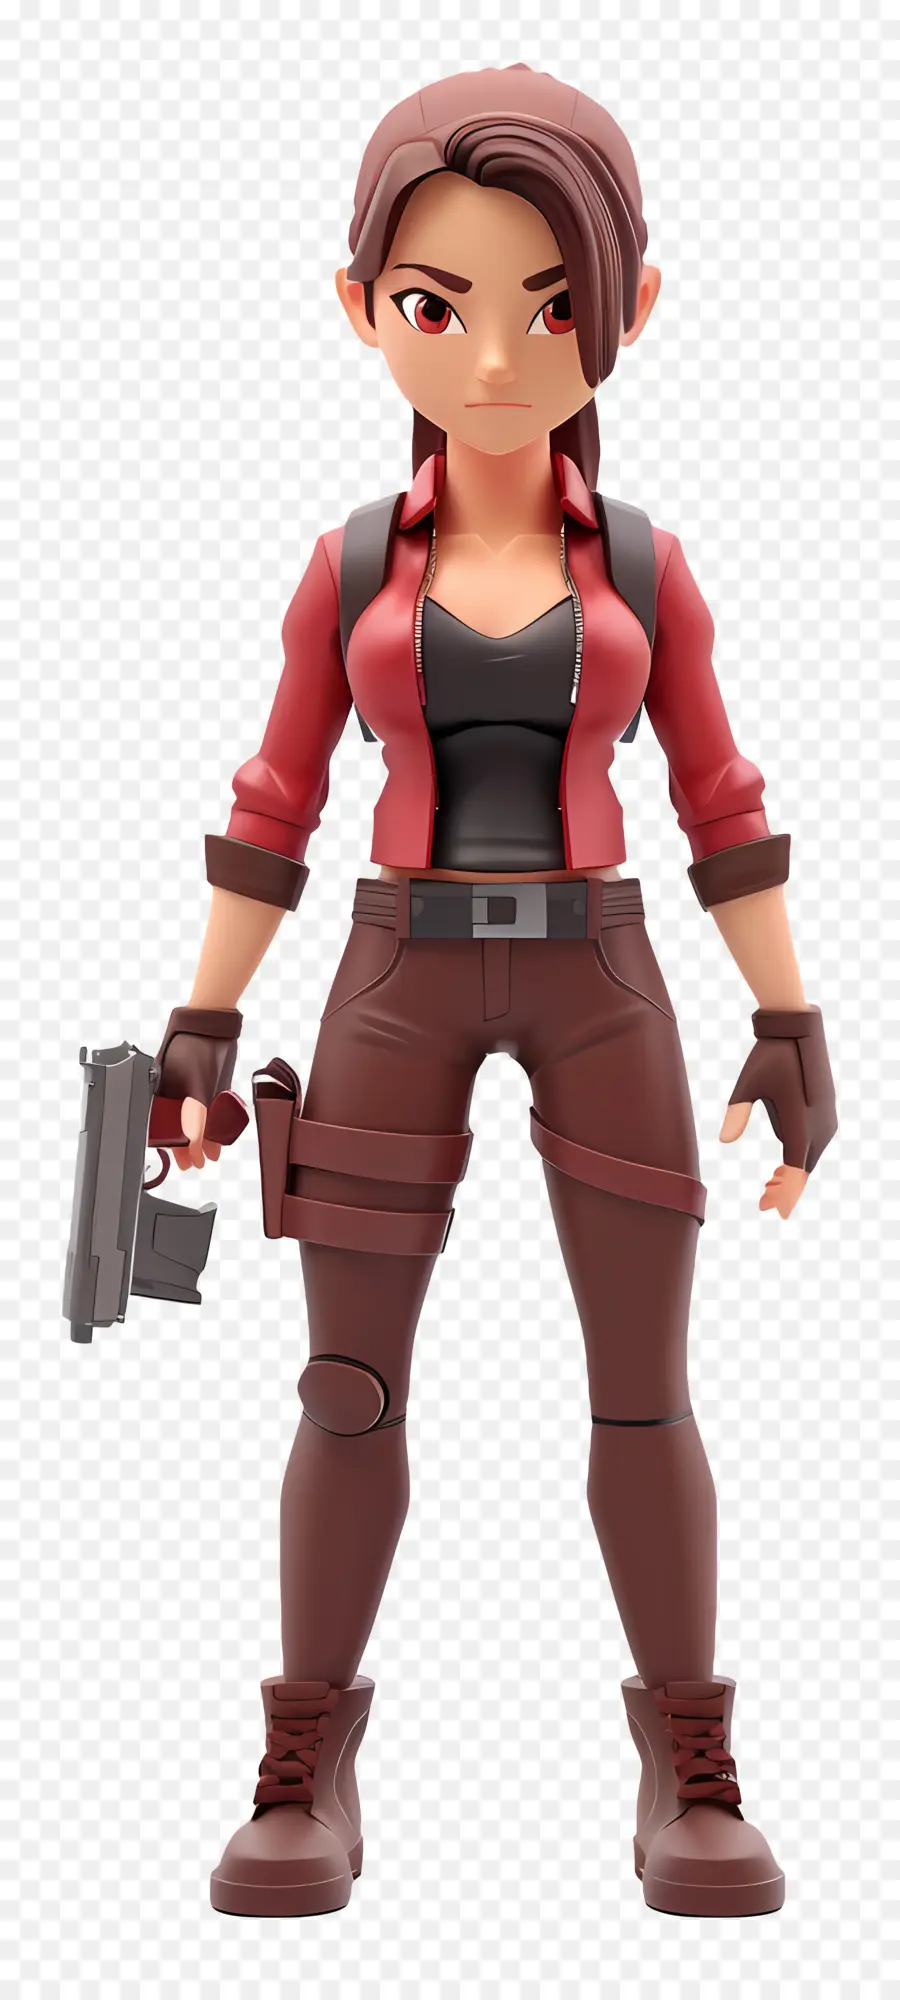 Claire Redfield Figur Frau Figur Waffe Figur rotes Hemd braune Hosen - Frau Figur mit Waffe in rotem Hemd